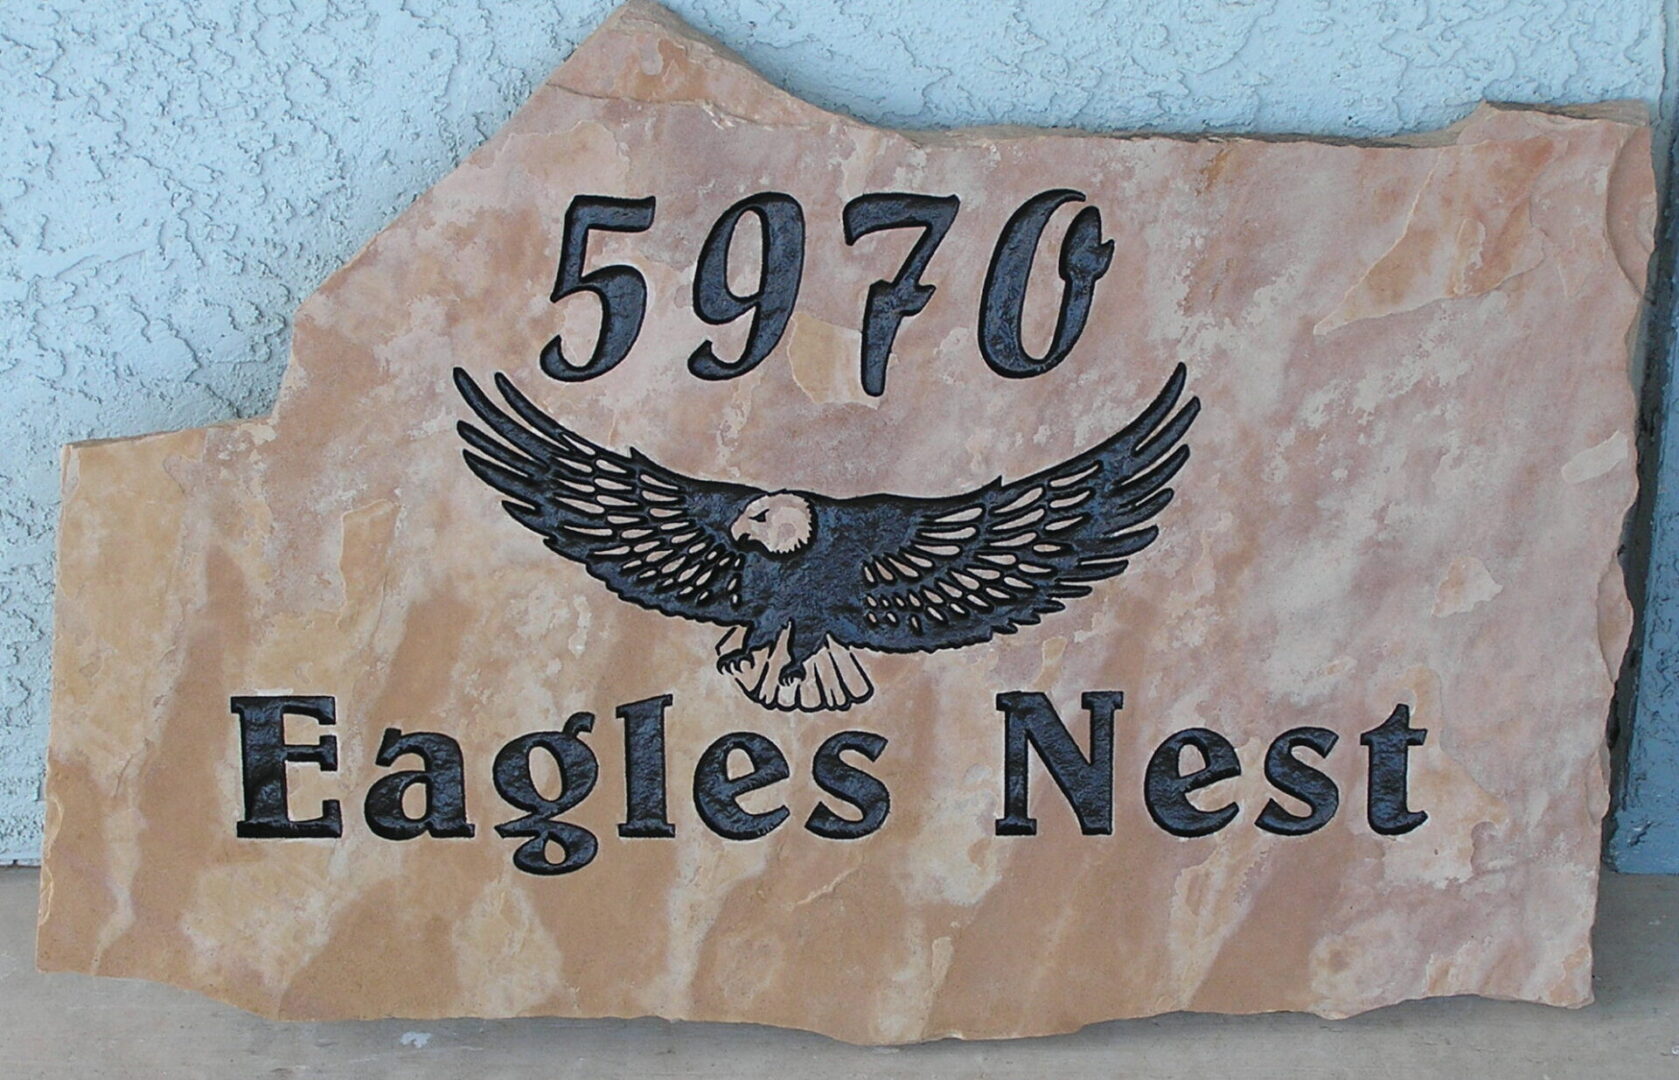 Black Rose Etching Flagstonele 5970 Eagles Nest